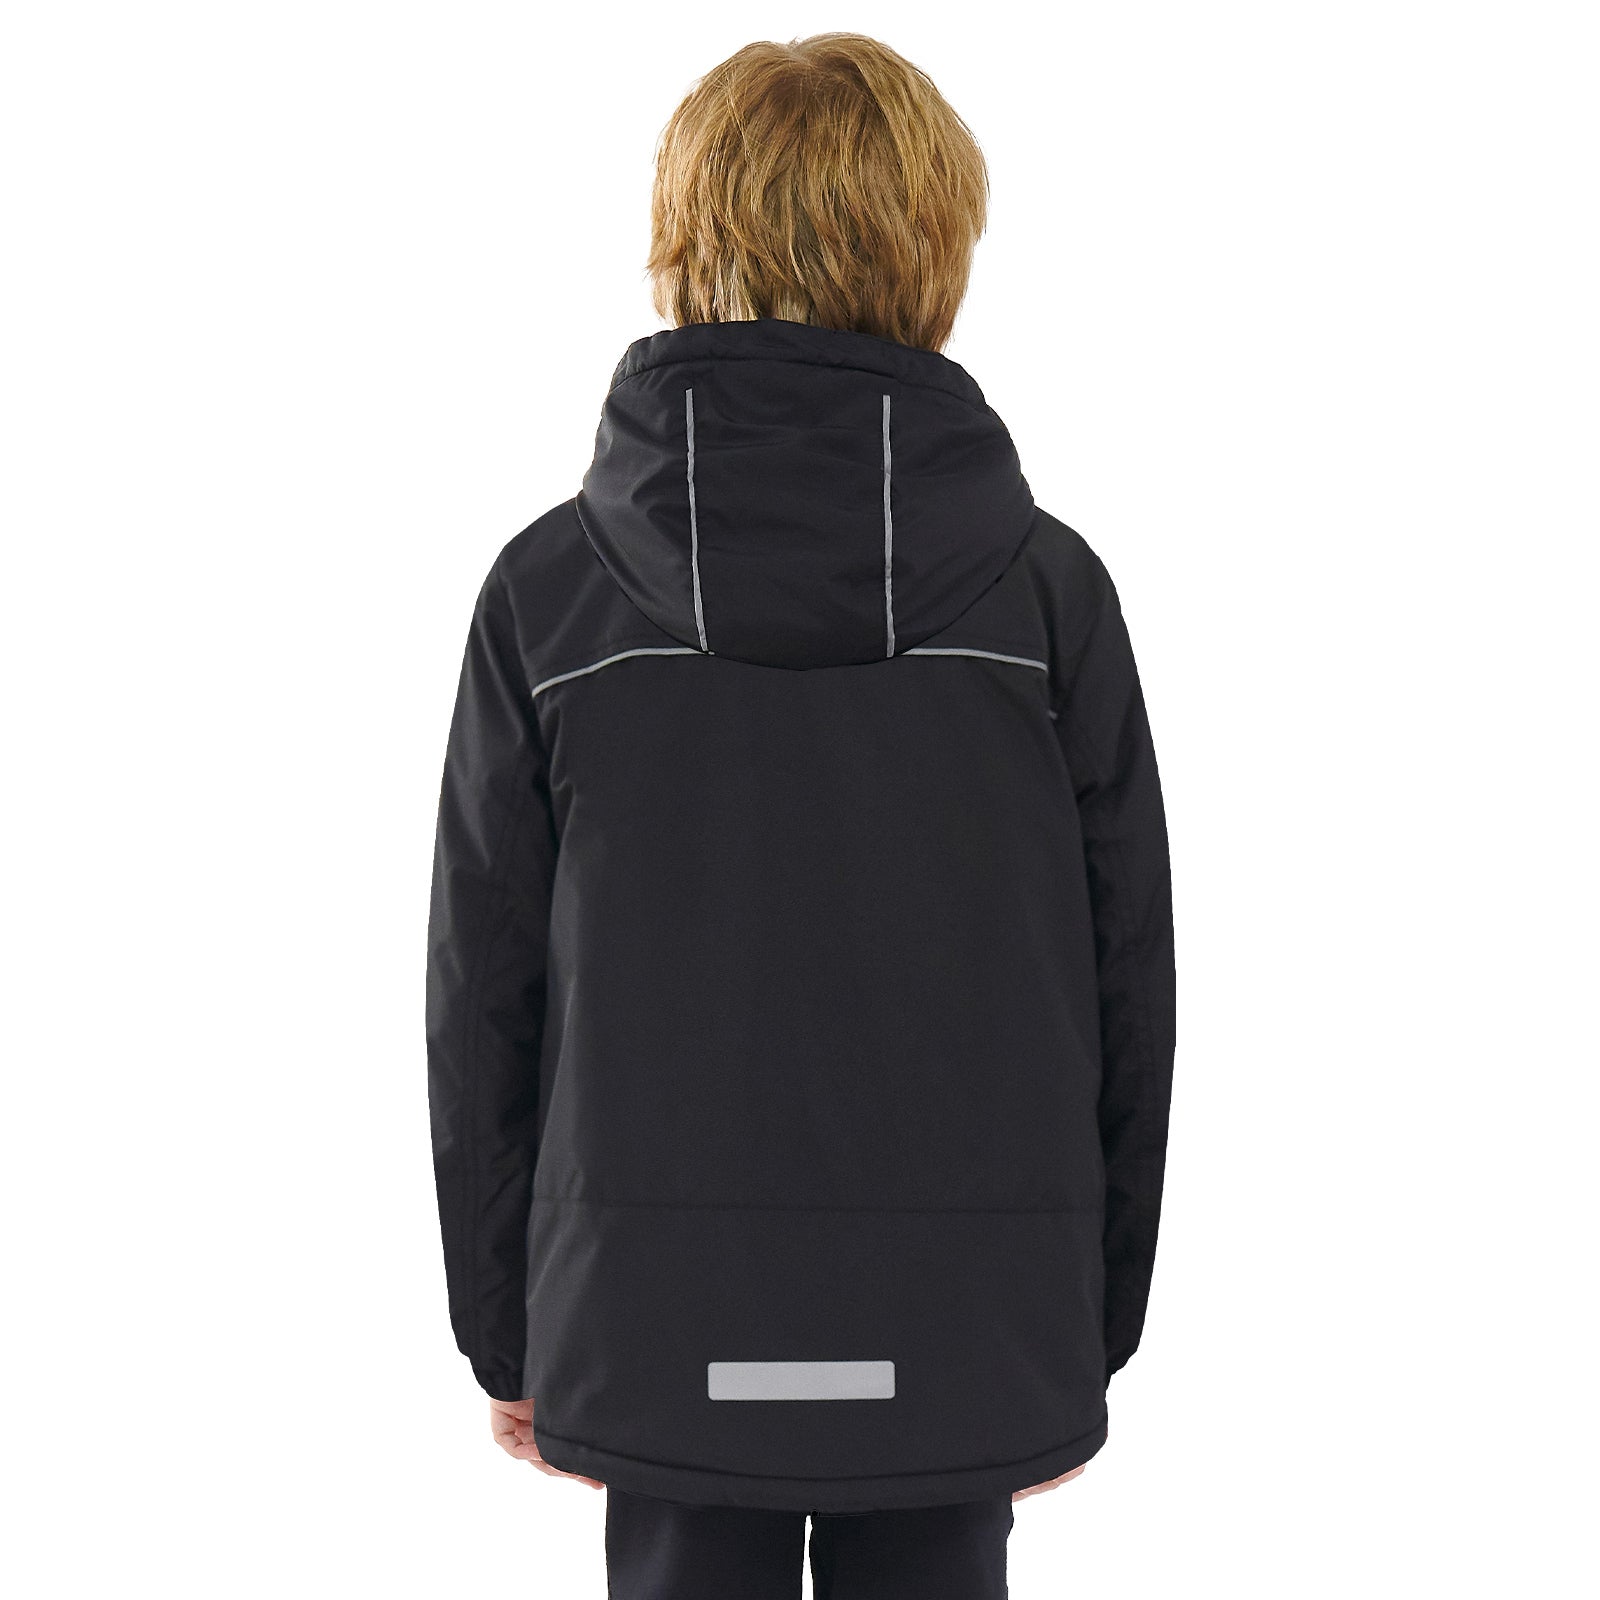 PAMLULU Boy's Thick Fleece Lined Hooded Snowboarding Ski Jackets